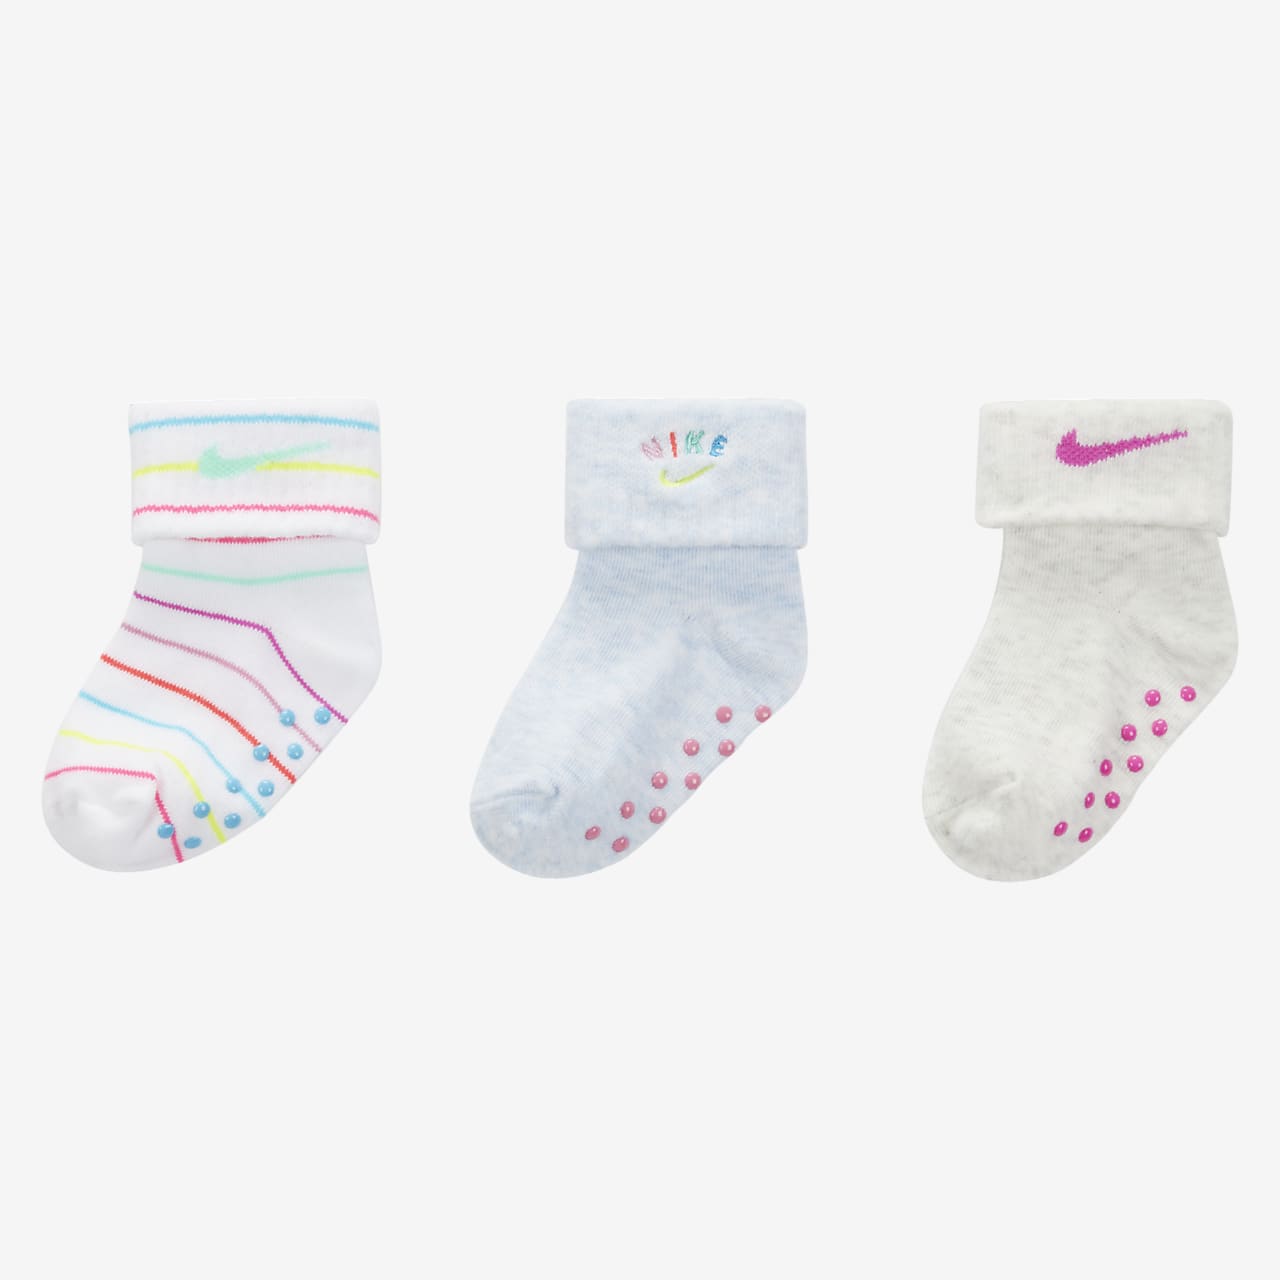 Crónica Kilómetros Aprendiz Calcetines hasta el tobillo para bebé (12-24M) Nike Gripper (3 pares). Nike .com